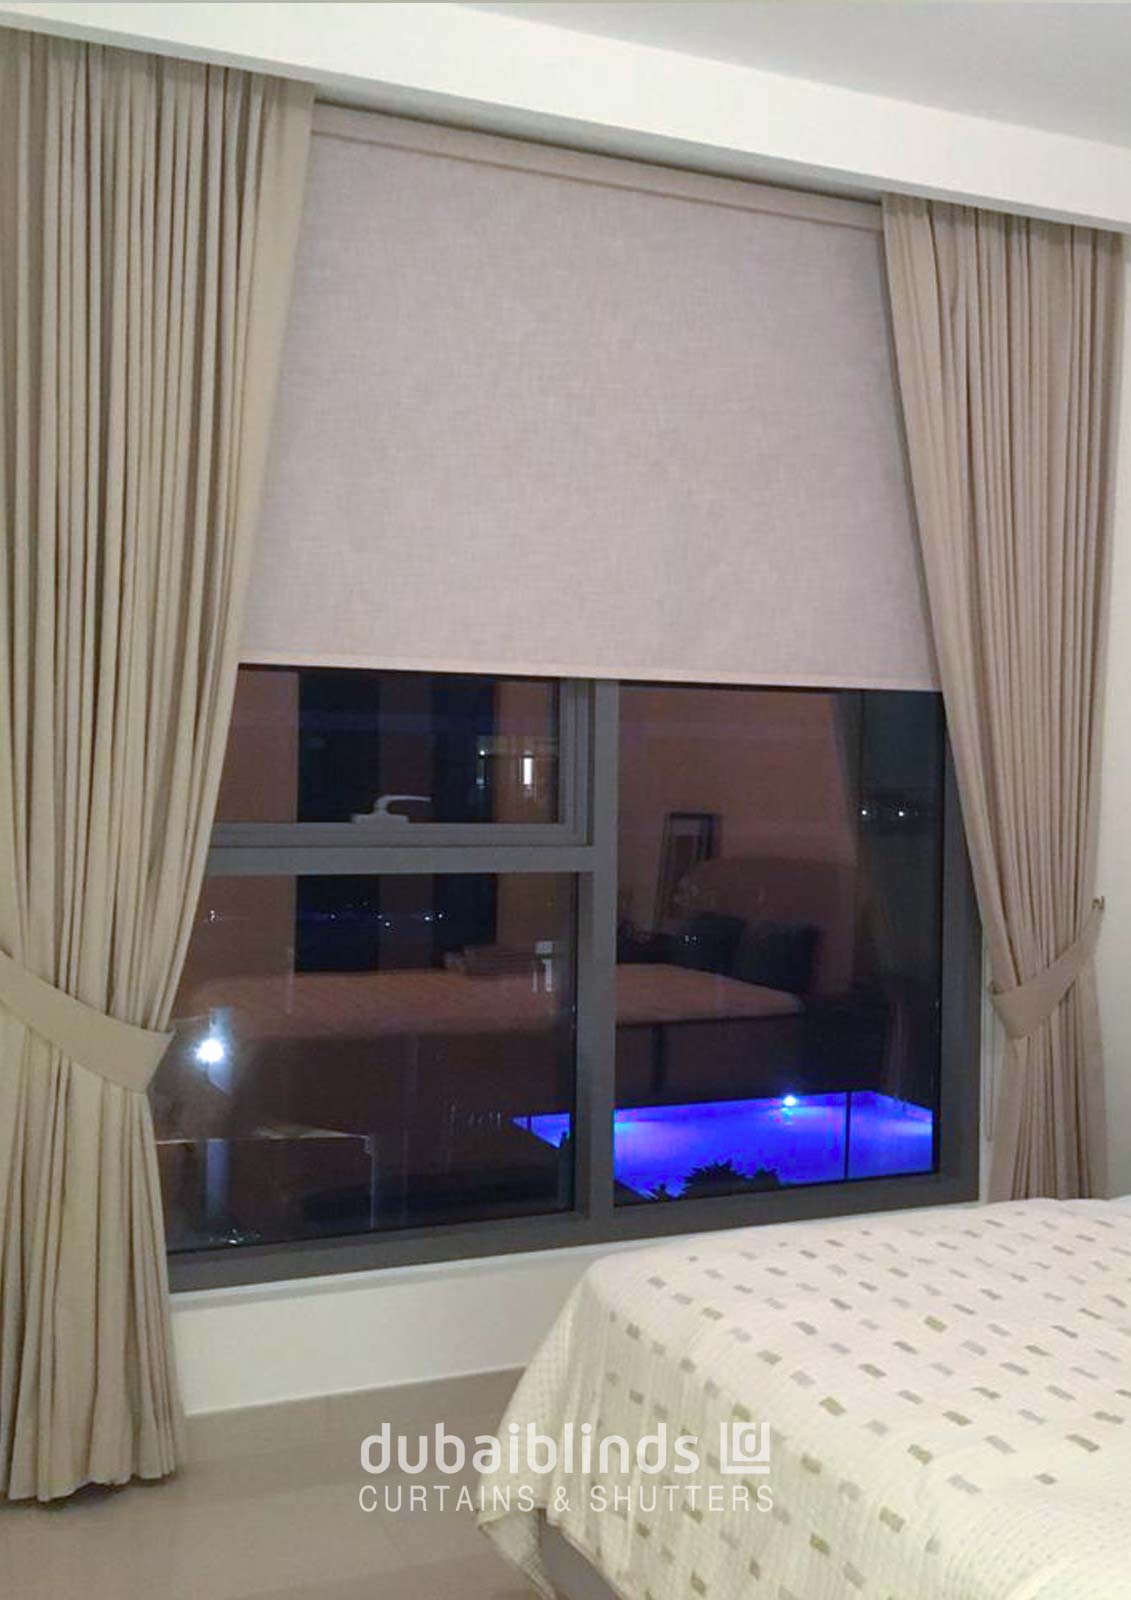 Dubai Hills Blinds & Curtains